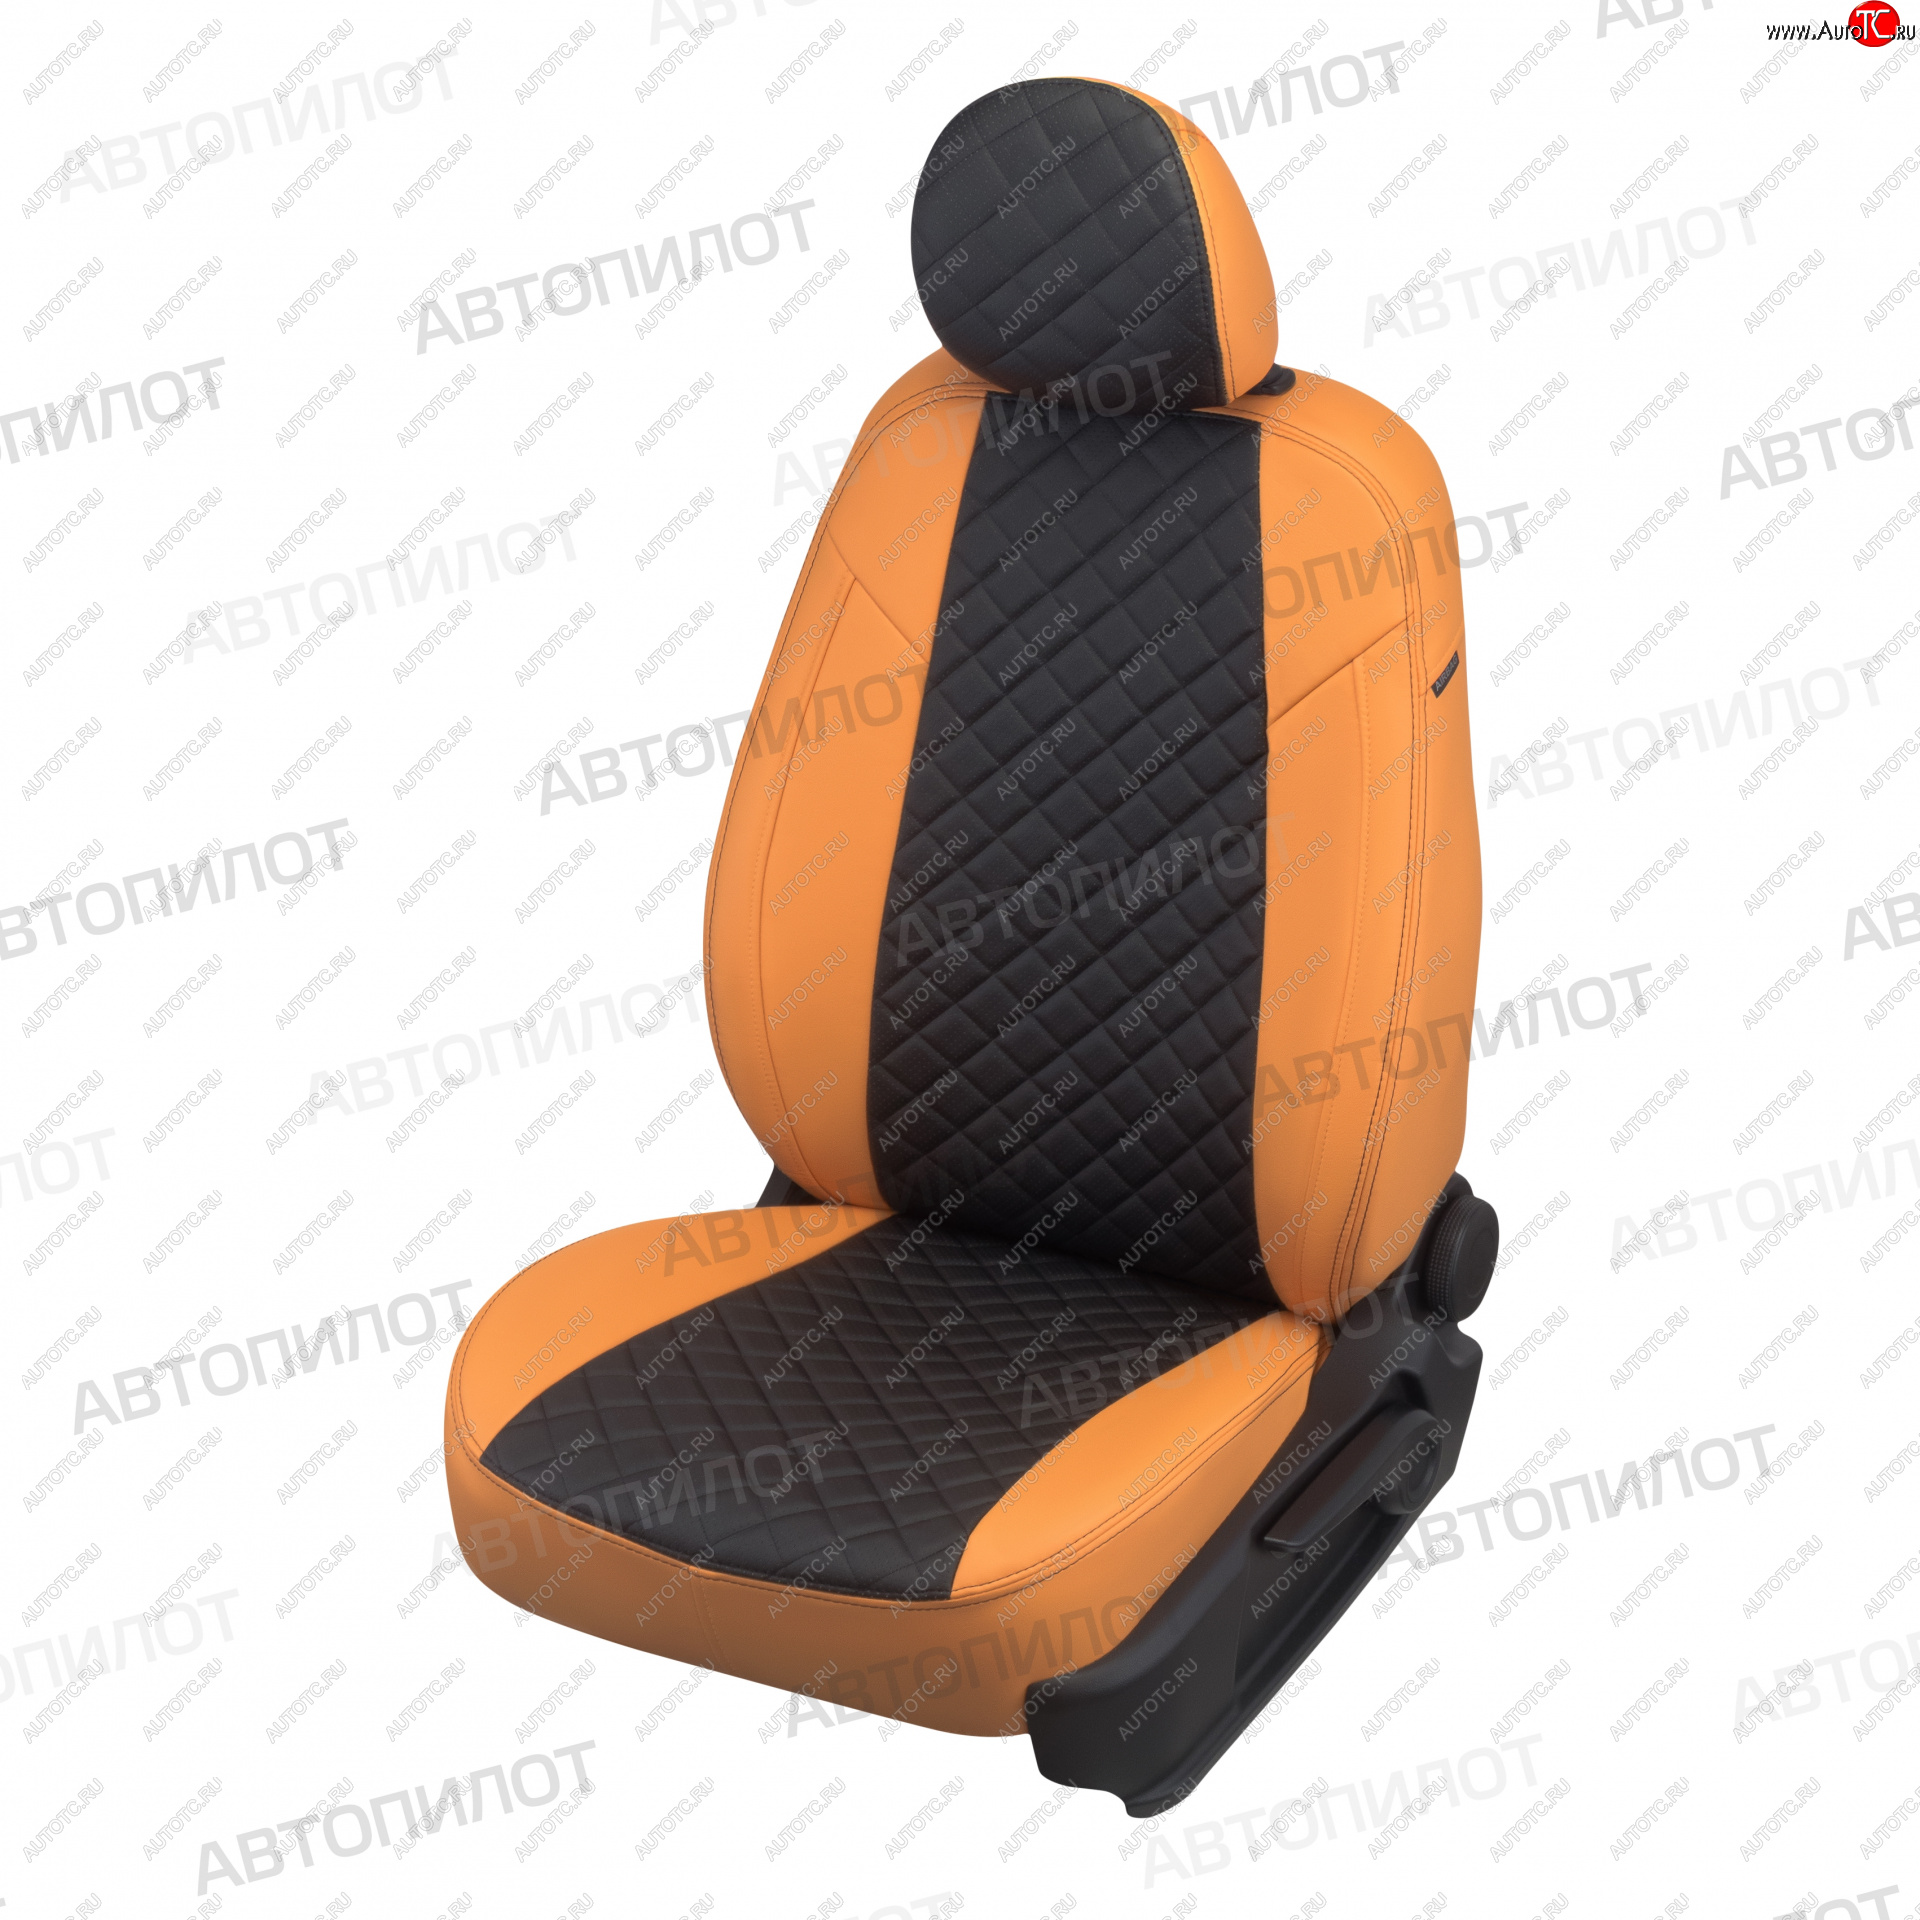 13 999 р. Чехлы сидений (экокожа) Автопилот Ромб  KIA Picanto  1 SA хэтчбэк 5 дв. (2003-2011) (оранж/черный)